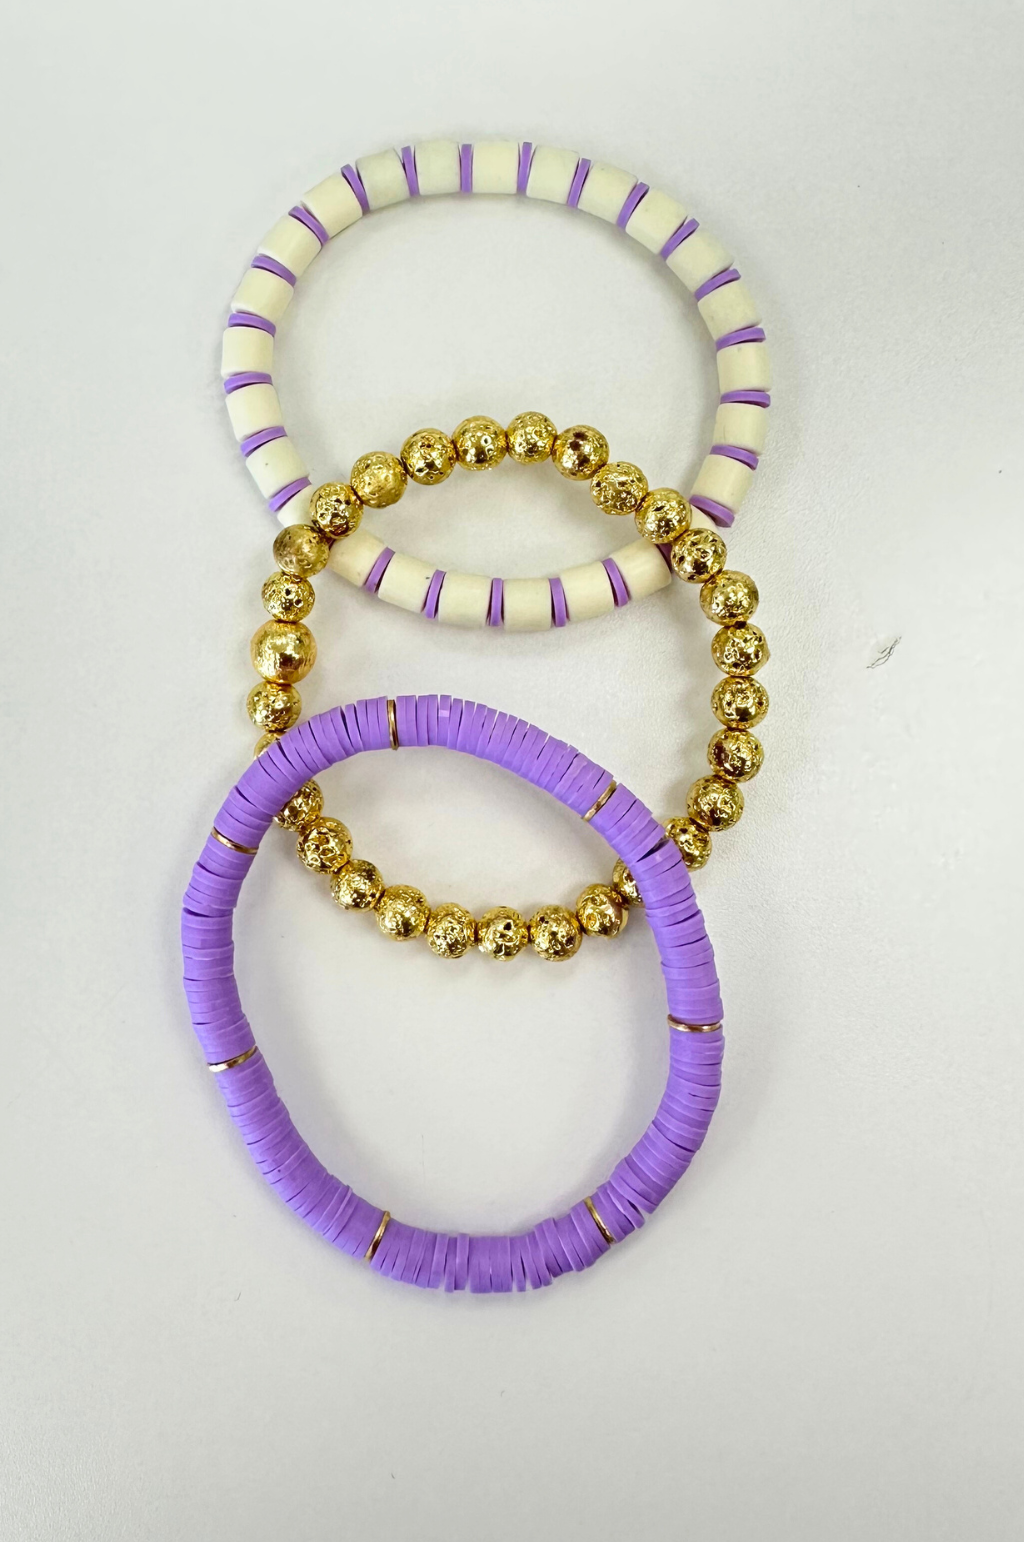 Marley Spirit Bracelet Stack by Annie Claire Designs - SoSis